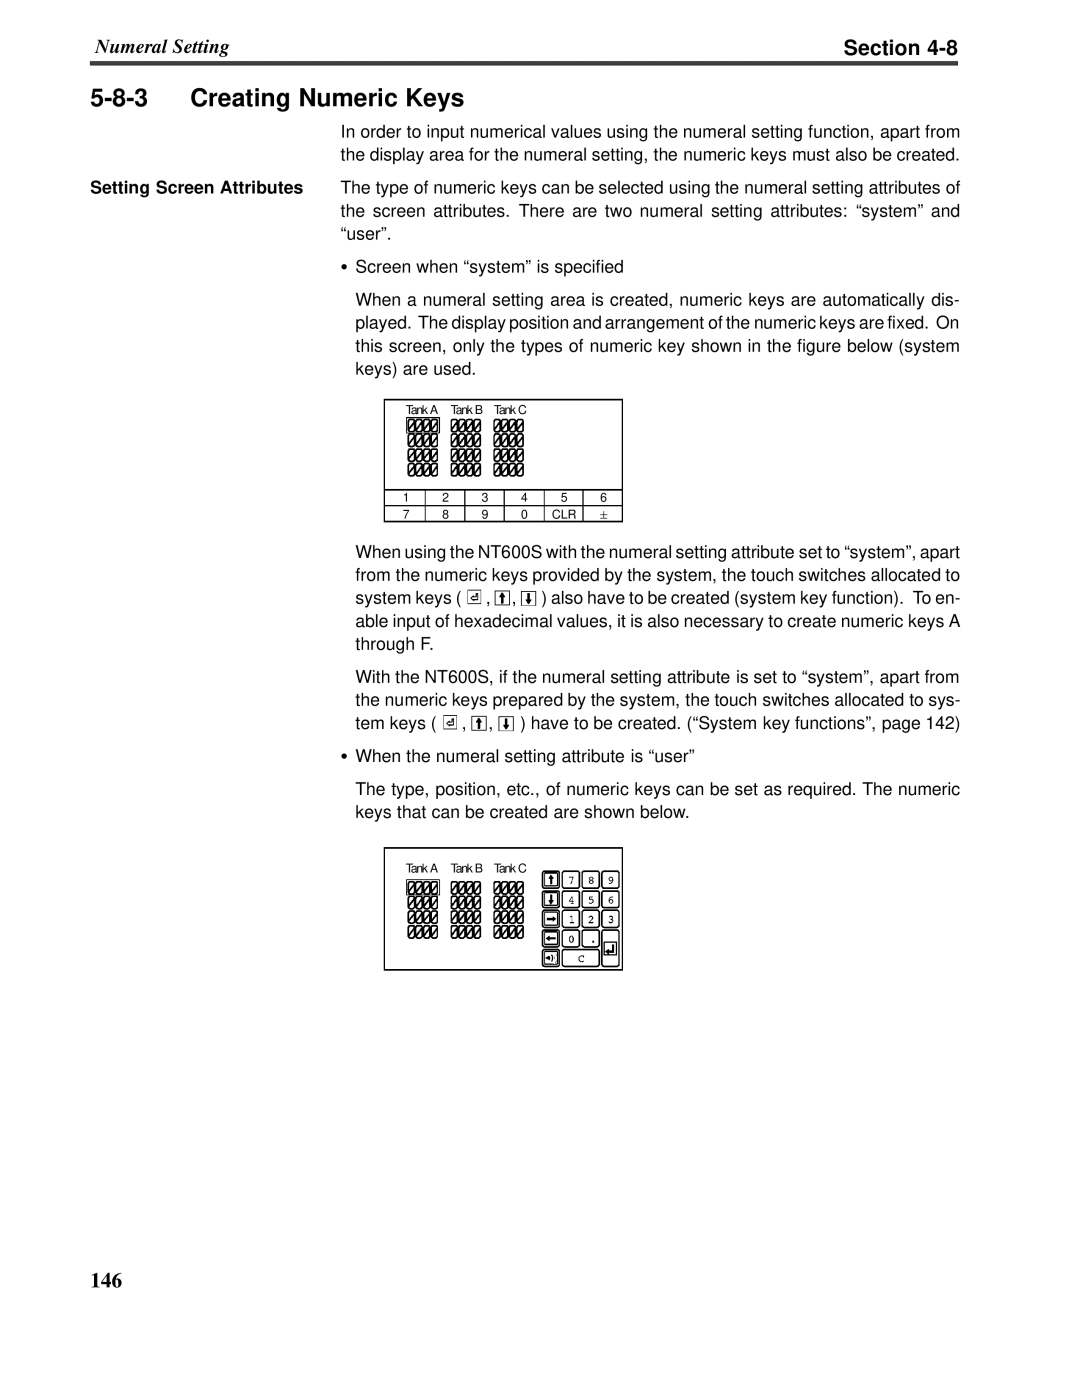 Omron V022-E3-1 operation manual 5-8-3Creating Numeric Keys, Section 